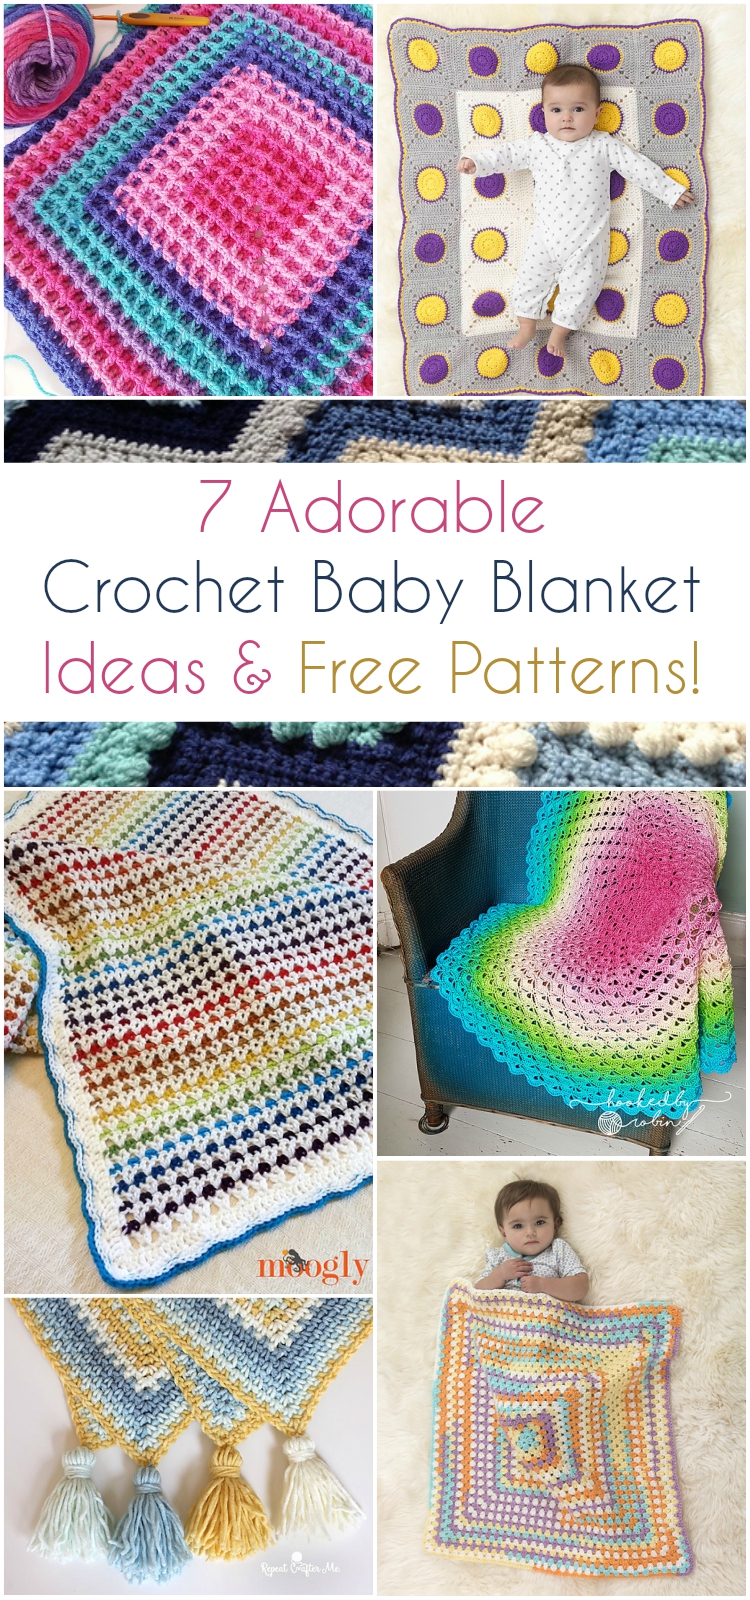 7 Adorable Crochet Baby Blanket Ideas & Free Patterns